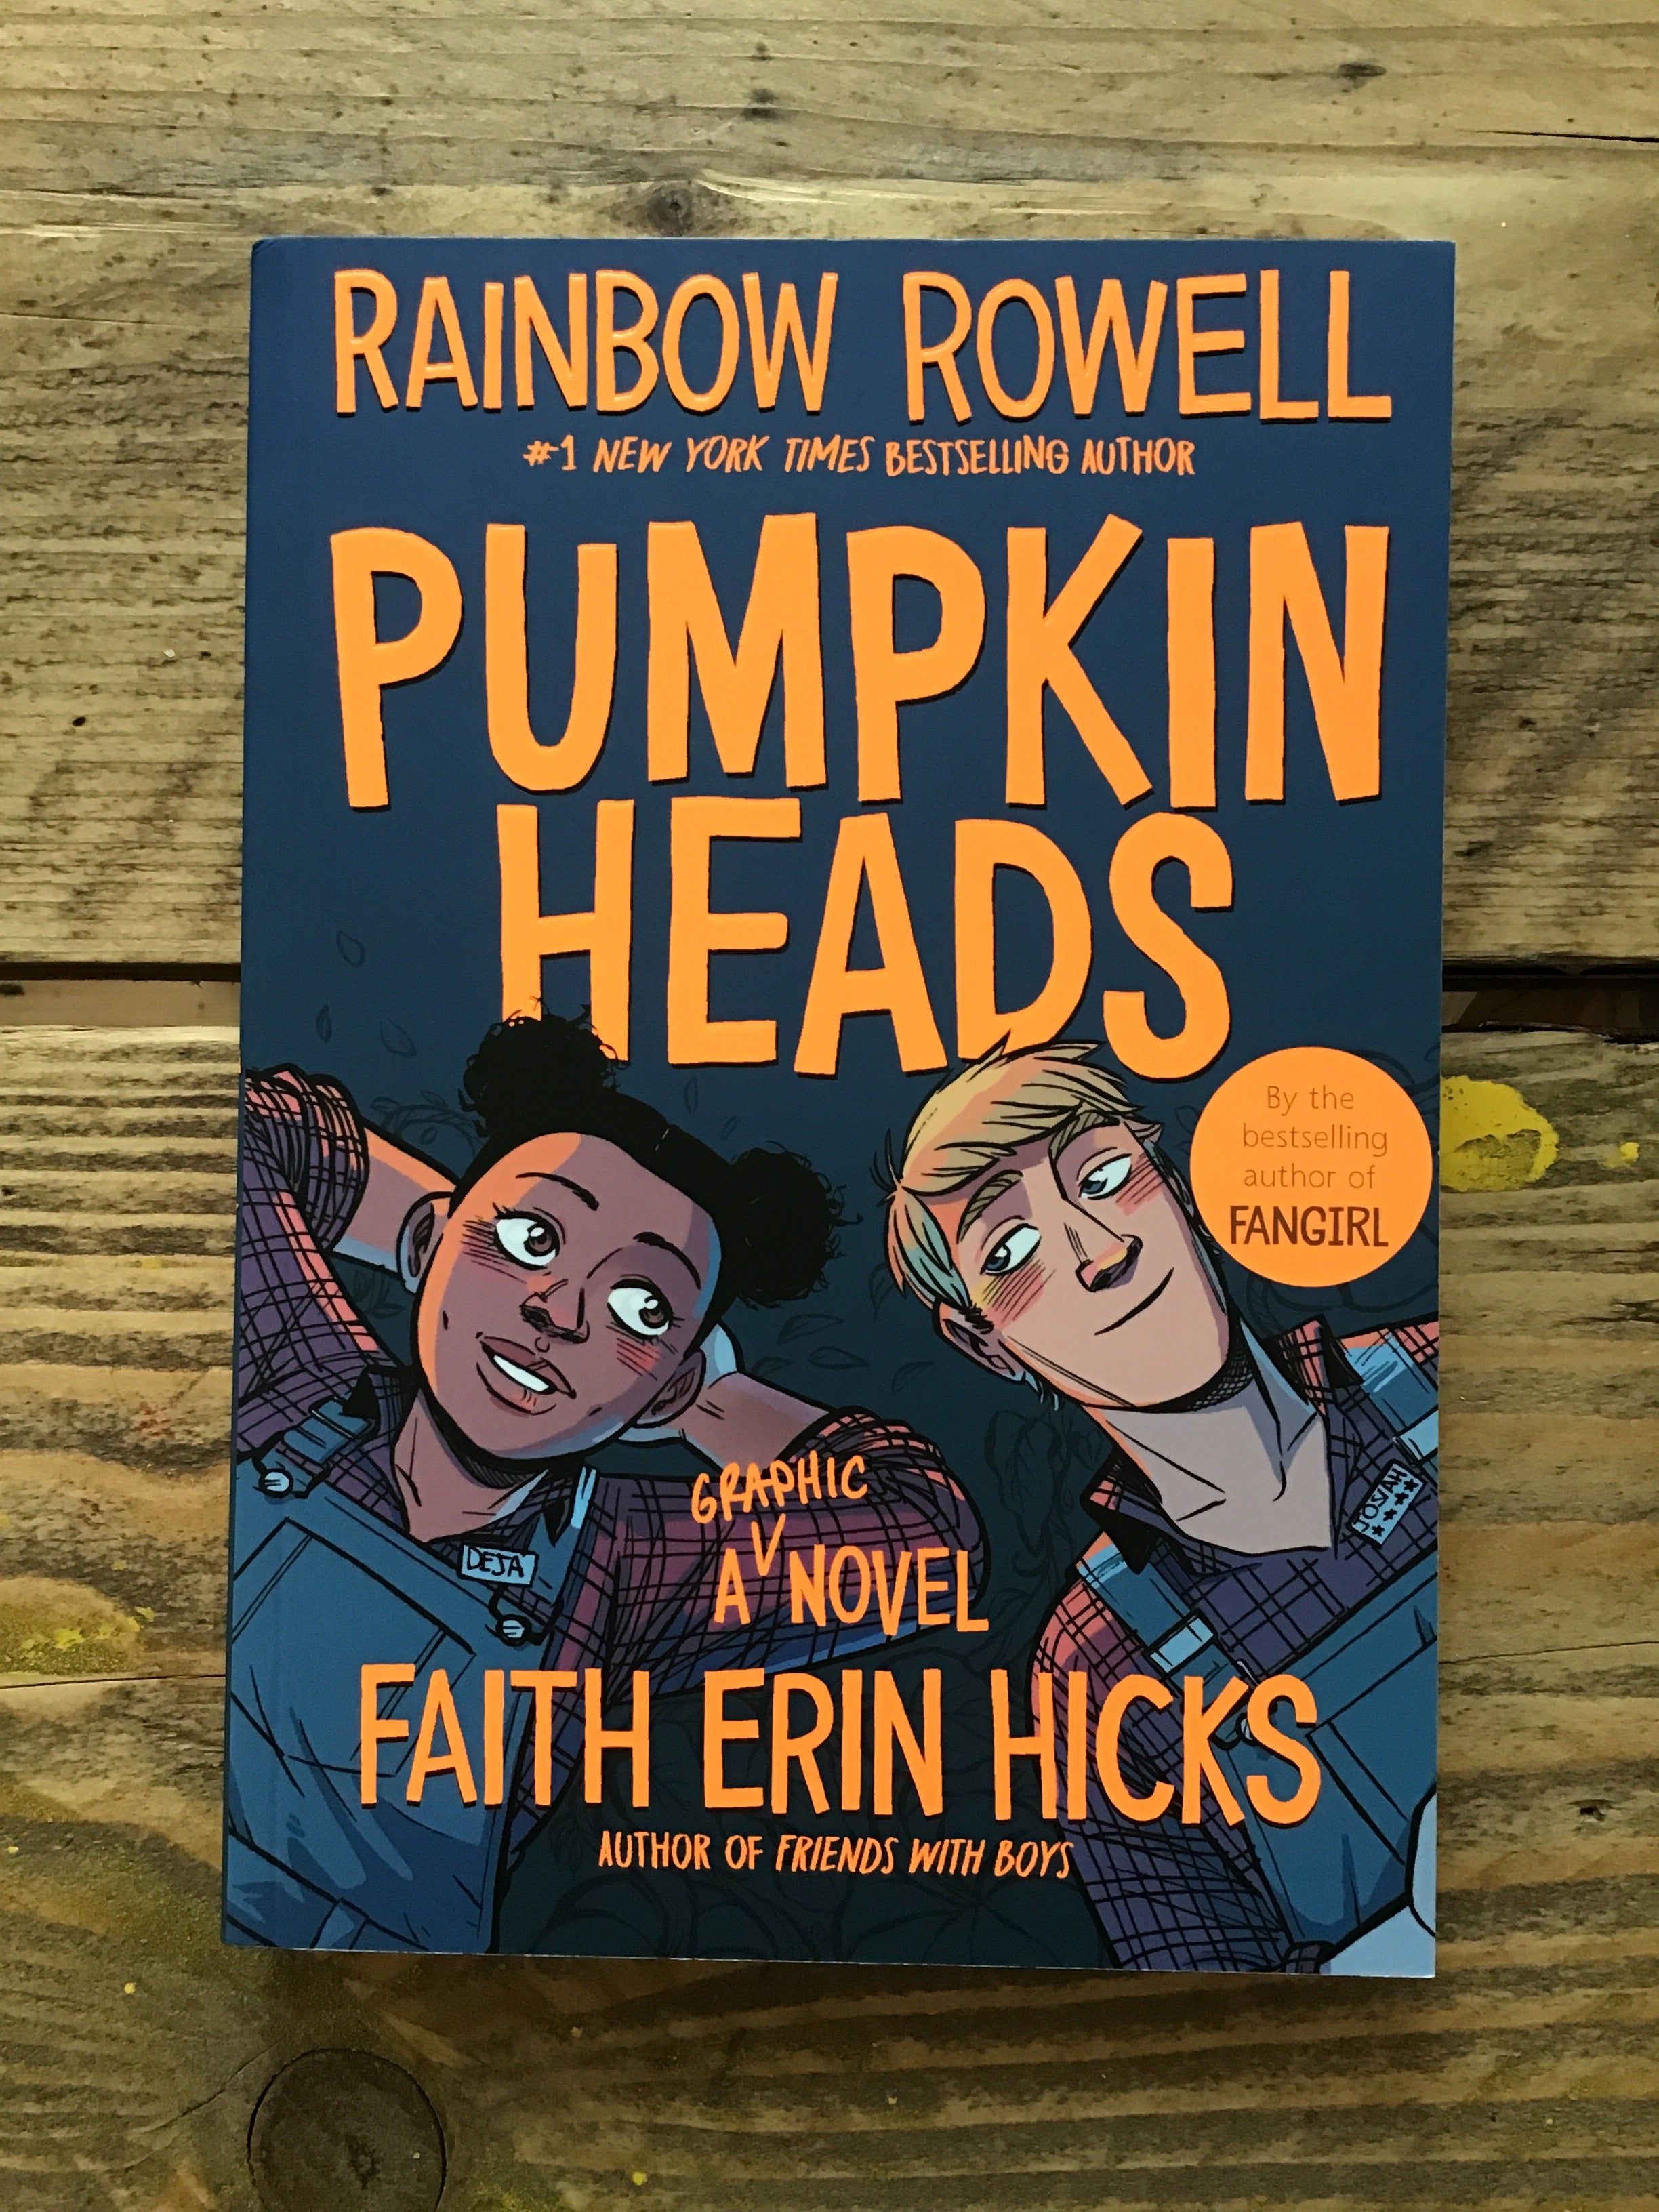 Pumpkinheads by Rainbow Rowell - Pan Macmillan